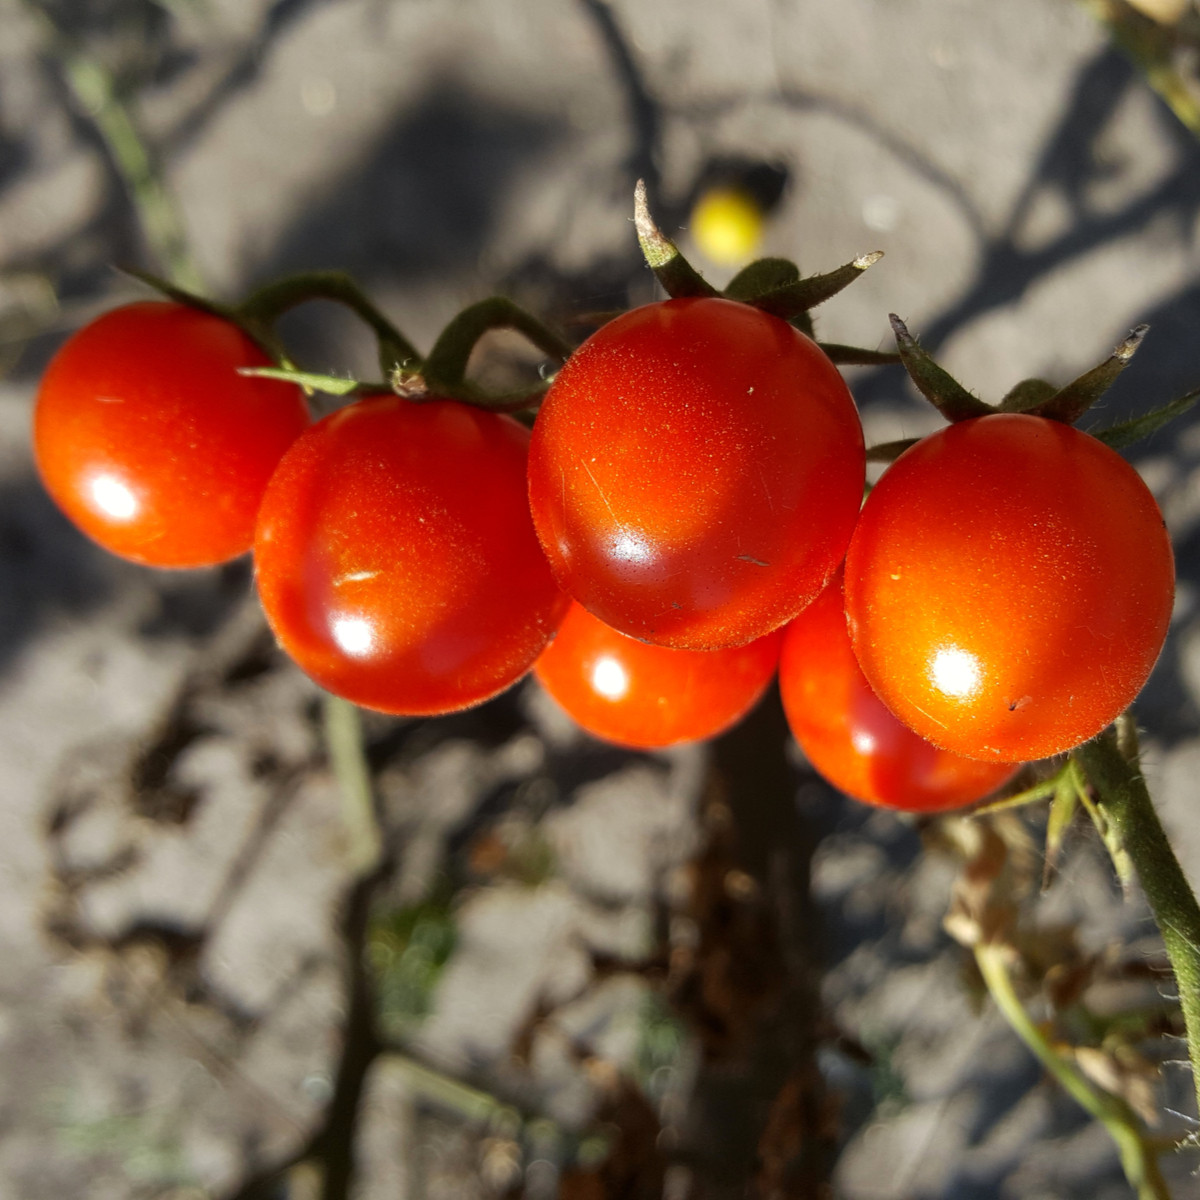 BIO Rajče Primabella PhR - Solanum lycopersicum - bio osivo rajčat - 8 ks